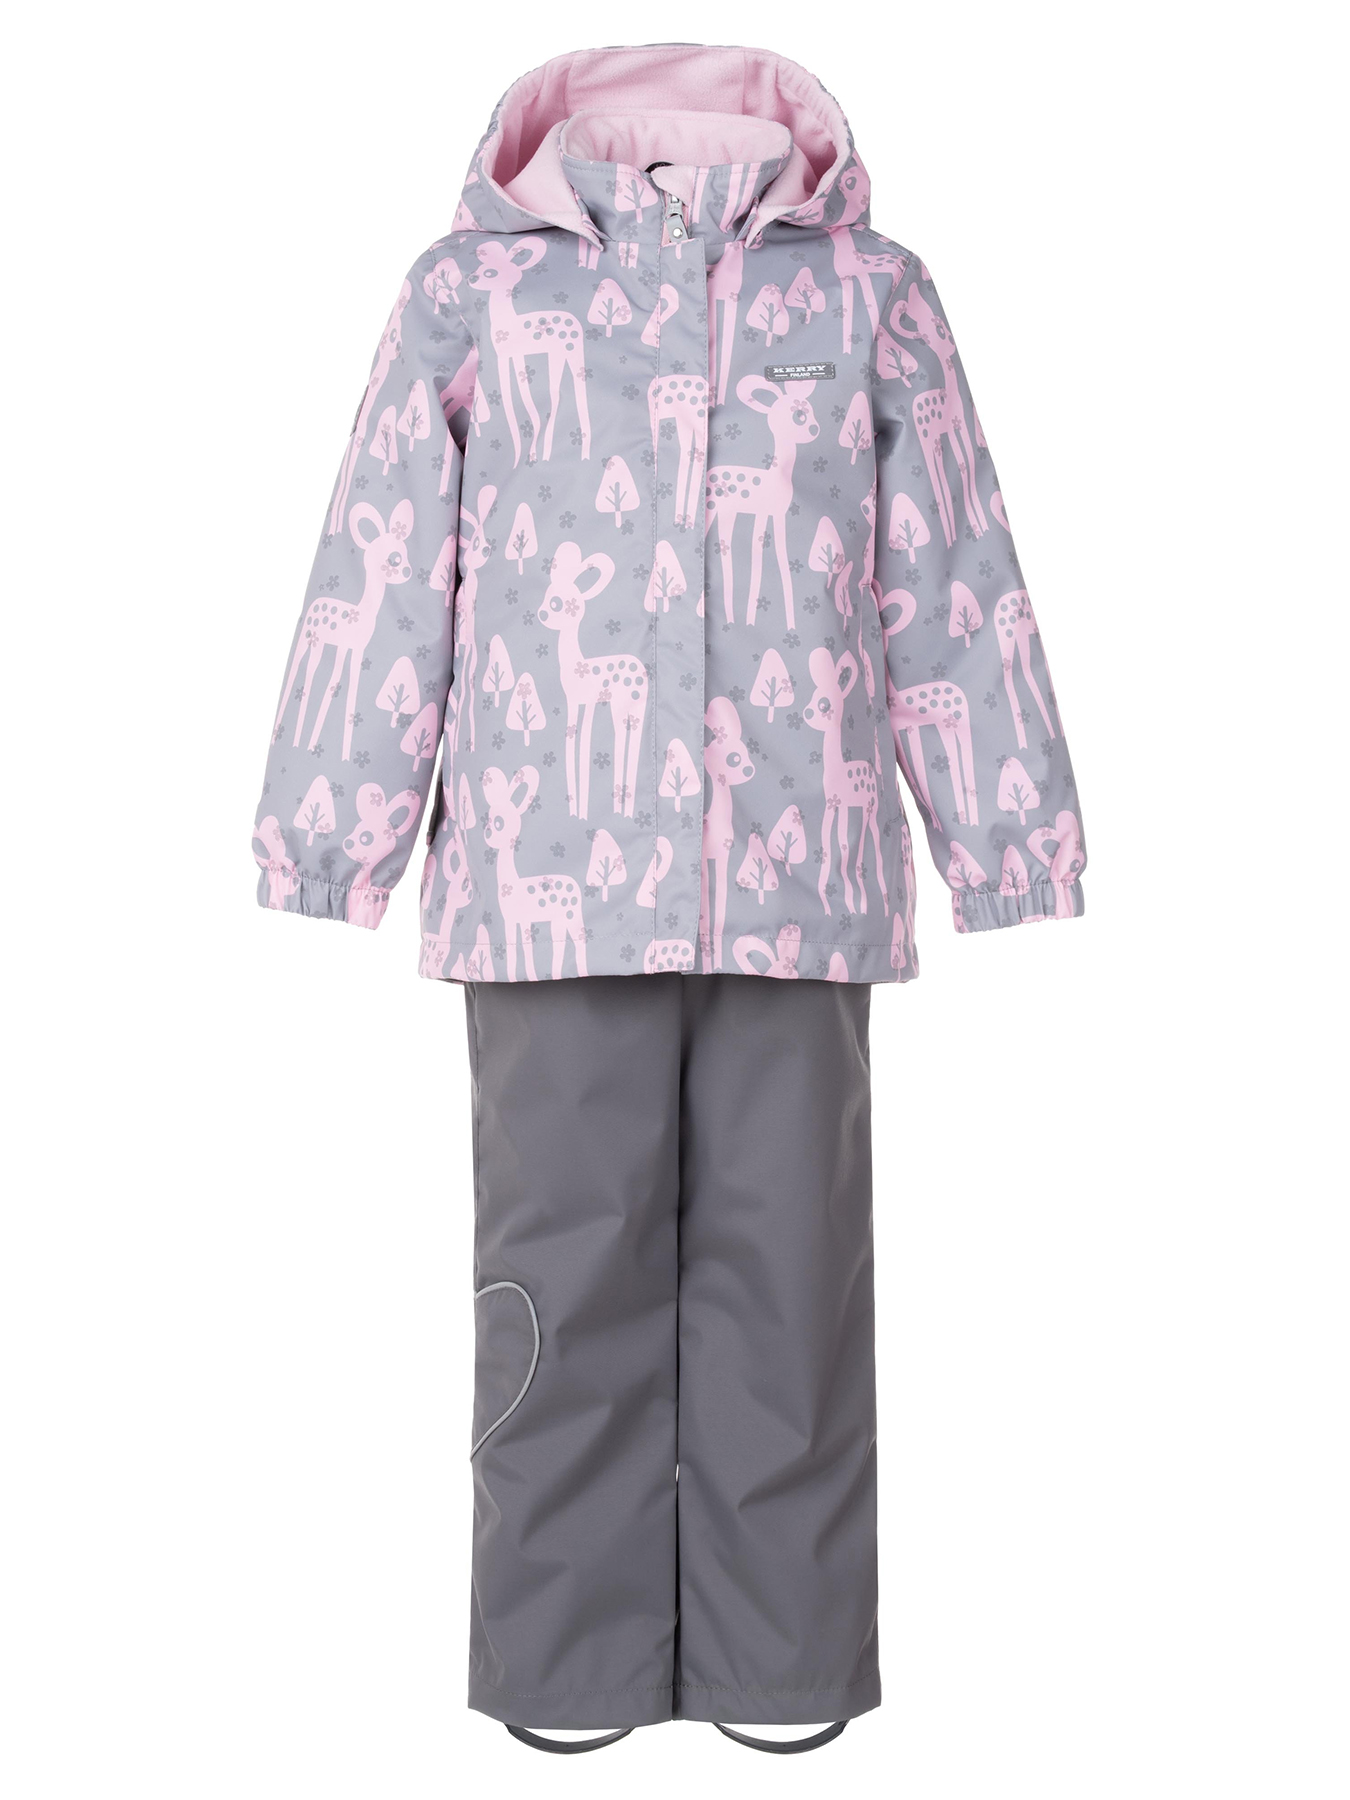 Комплект верхней одежды KERRY LISETTE K24031, 3700-светло-розовый/серый, 122